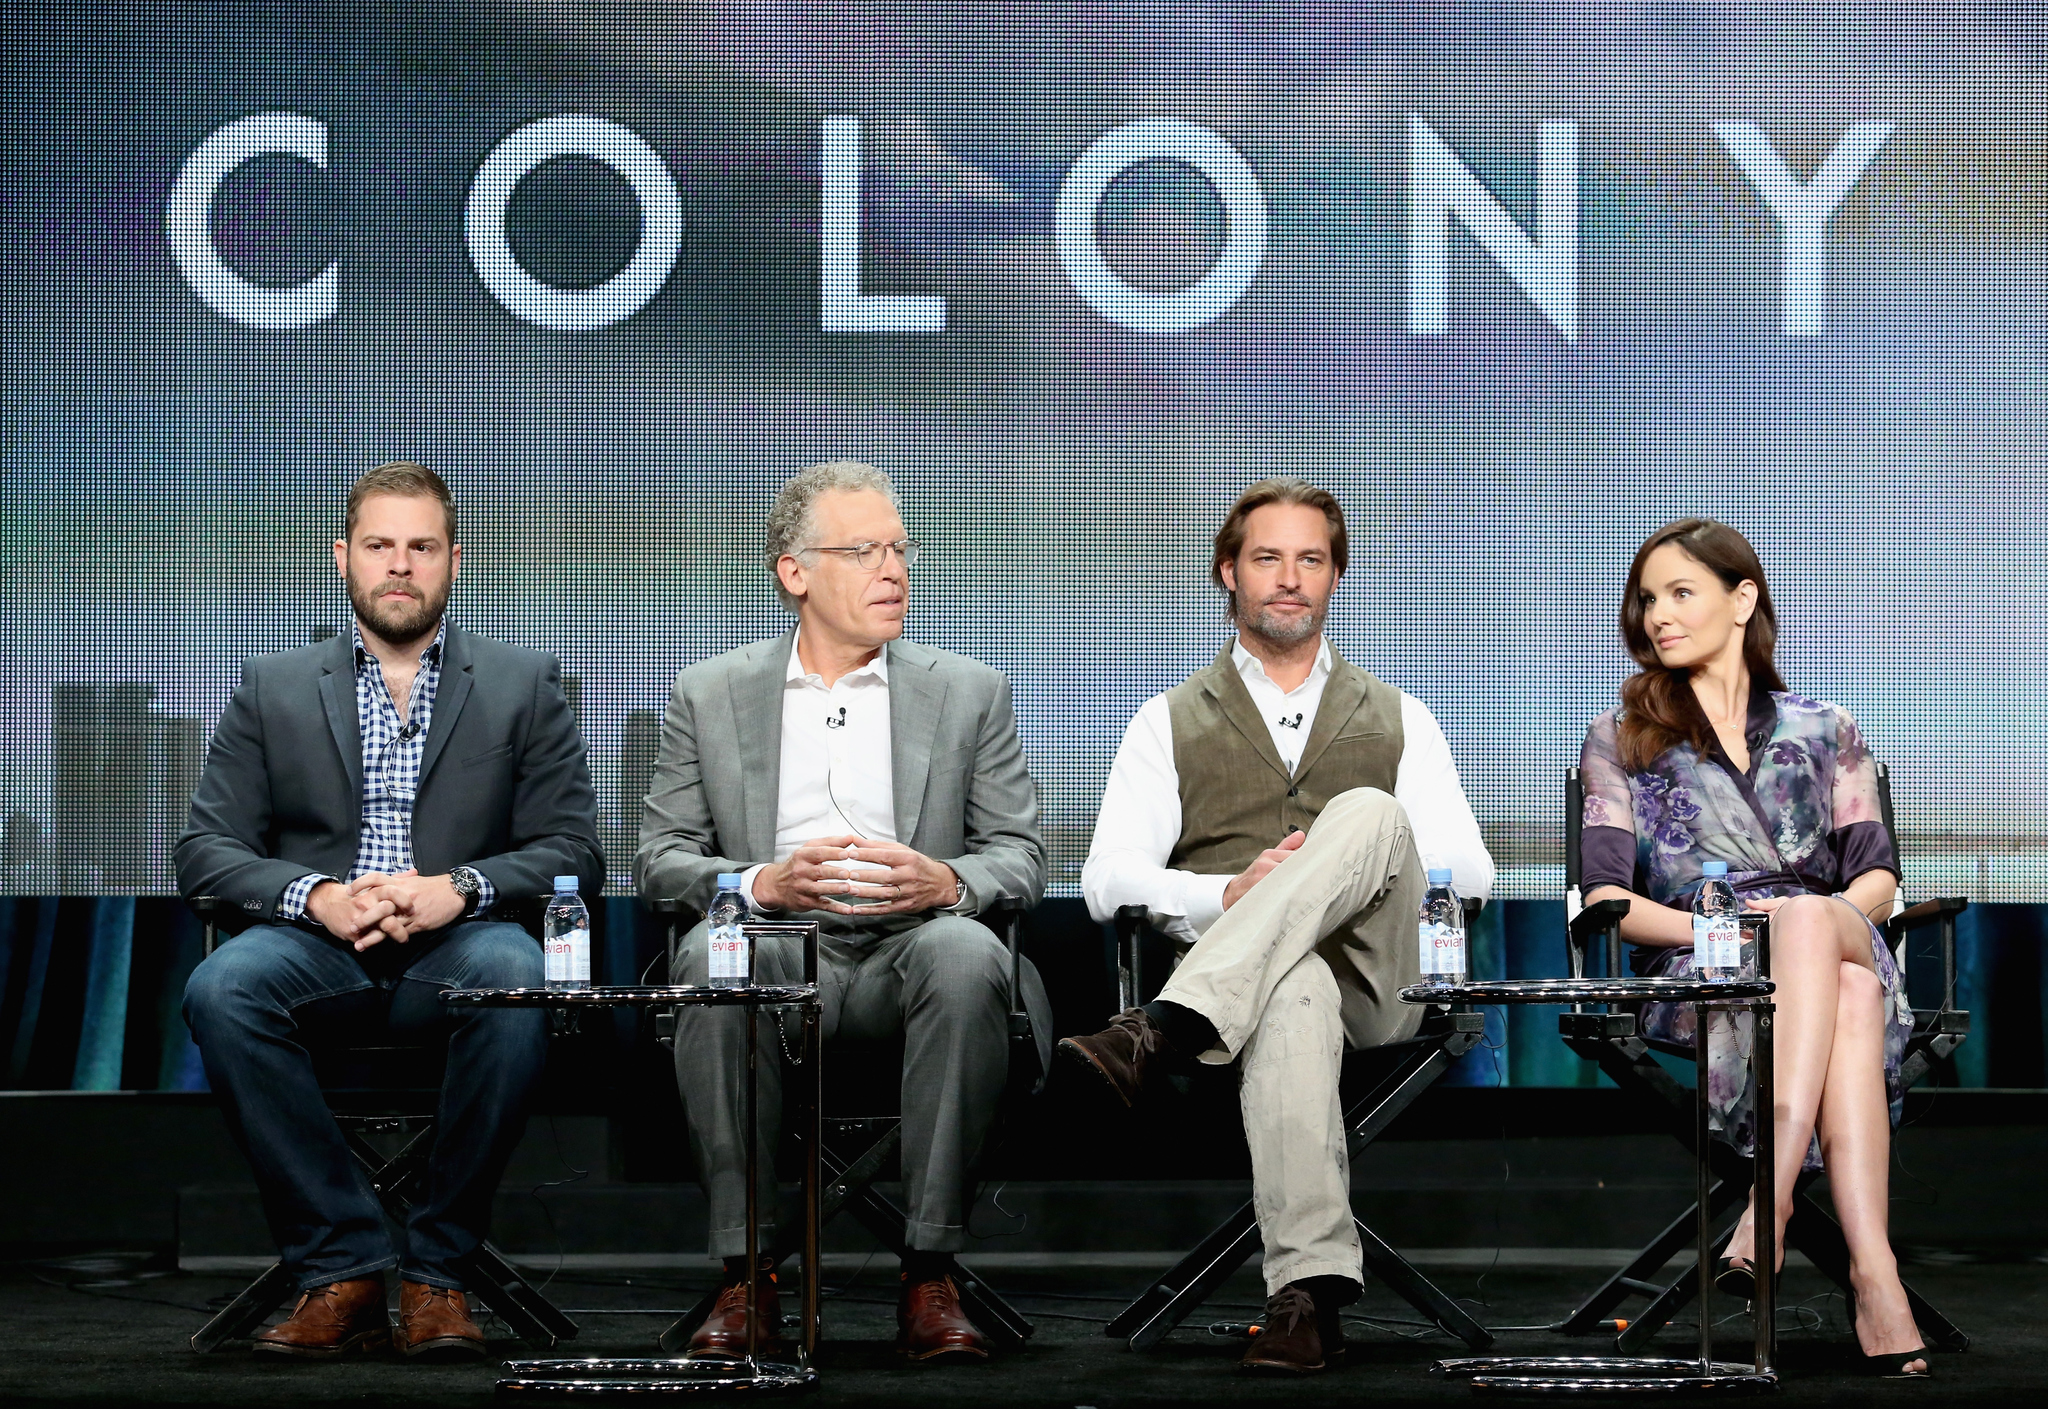 Carlton Cuse, Josh Holloway, Sarah Wayne Callies and Ryan Condal at event of Colony (2016)